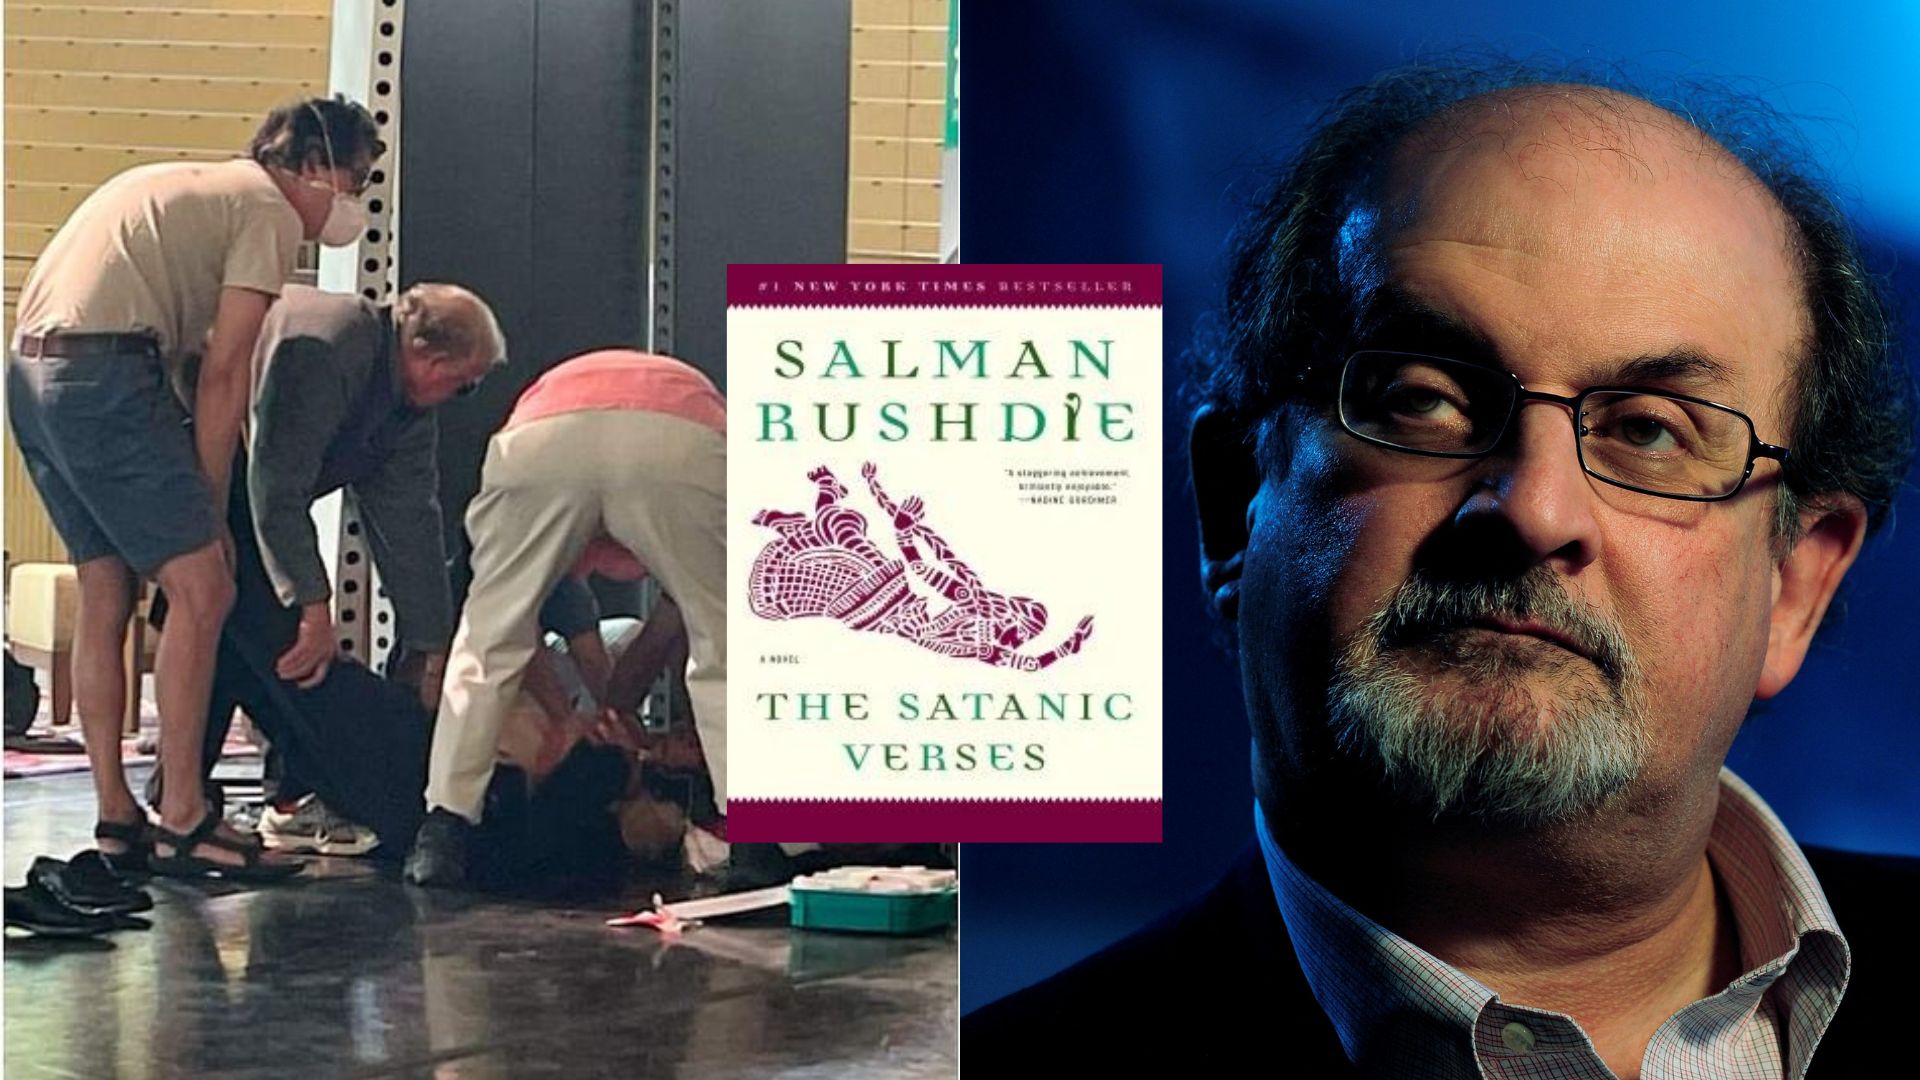 Salman Rushdie : సల్మాన్ రష్దీ ఎవరు?  33 ఏళ్లు గడిచినా, ‘ది సాటానిక్ వెర్సెస్’ ఎందుకు వివాదాస్పదం?